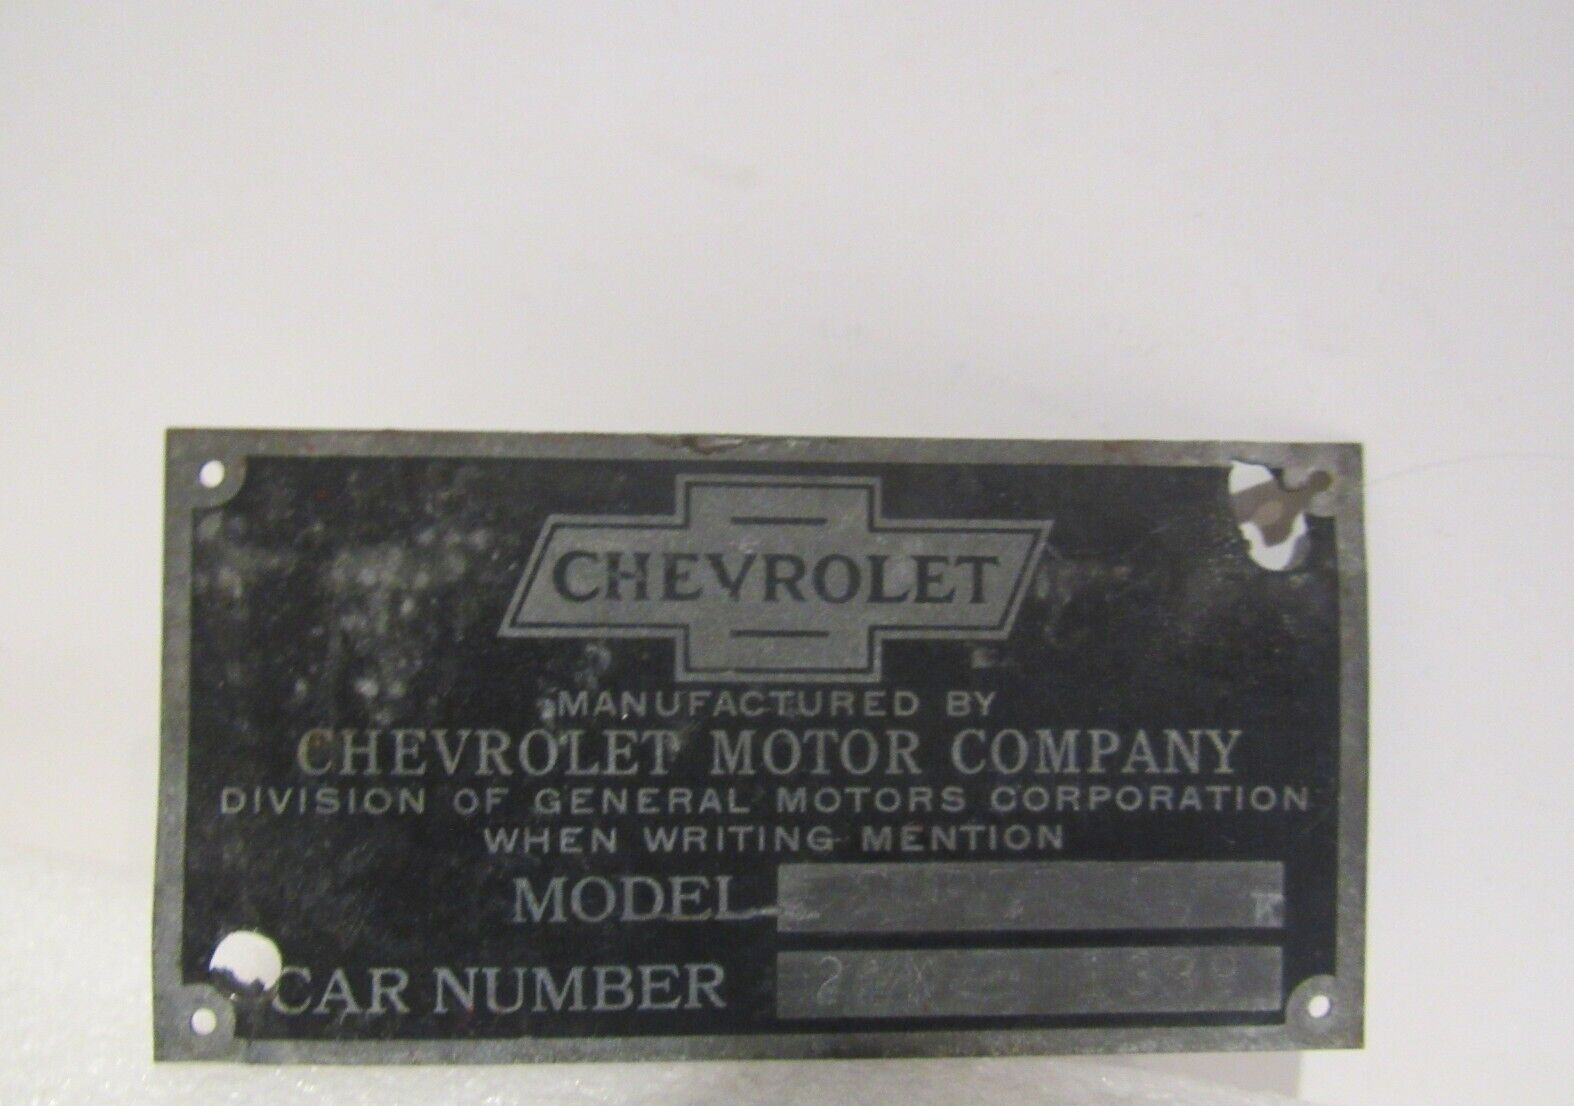 Vintage Chevy Chevrolet Motor Co Model No Car No Datal Emblem Metal Original